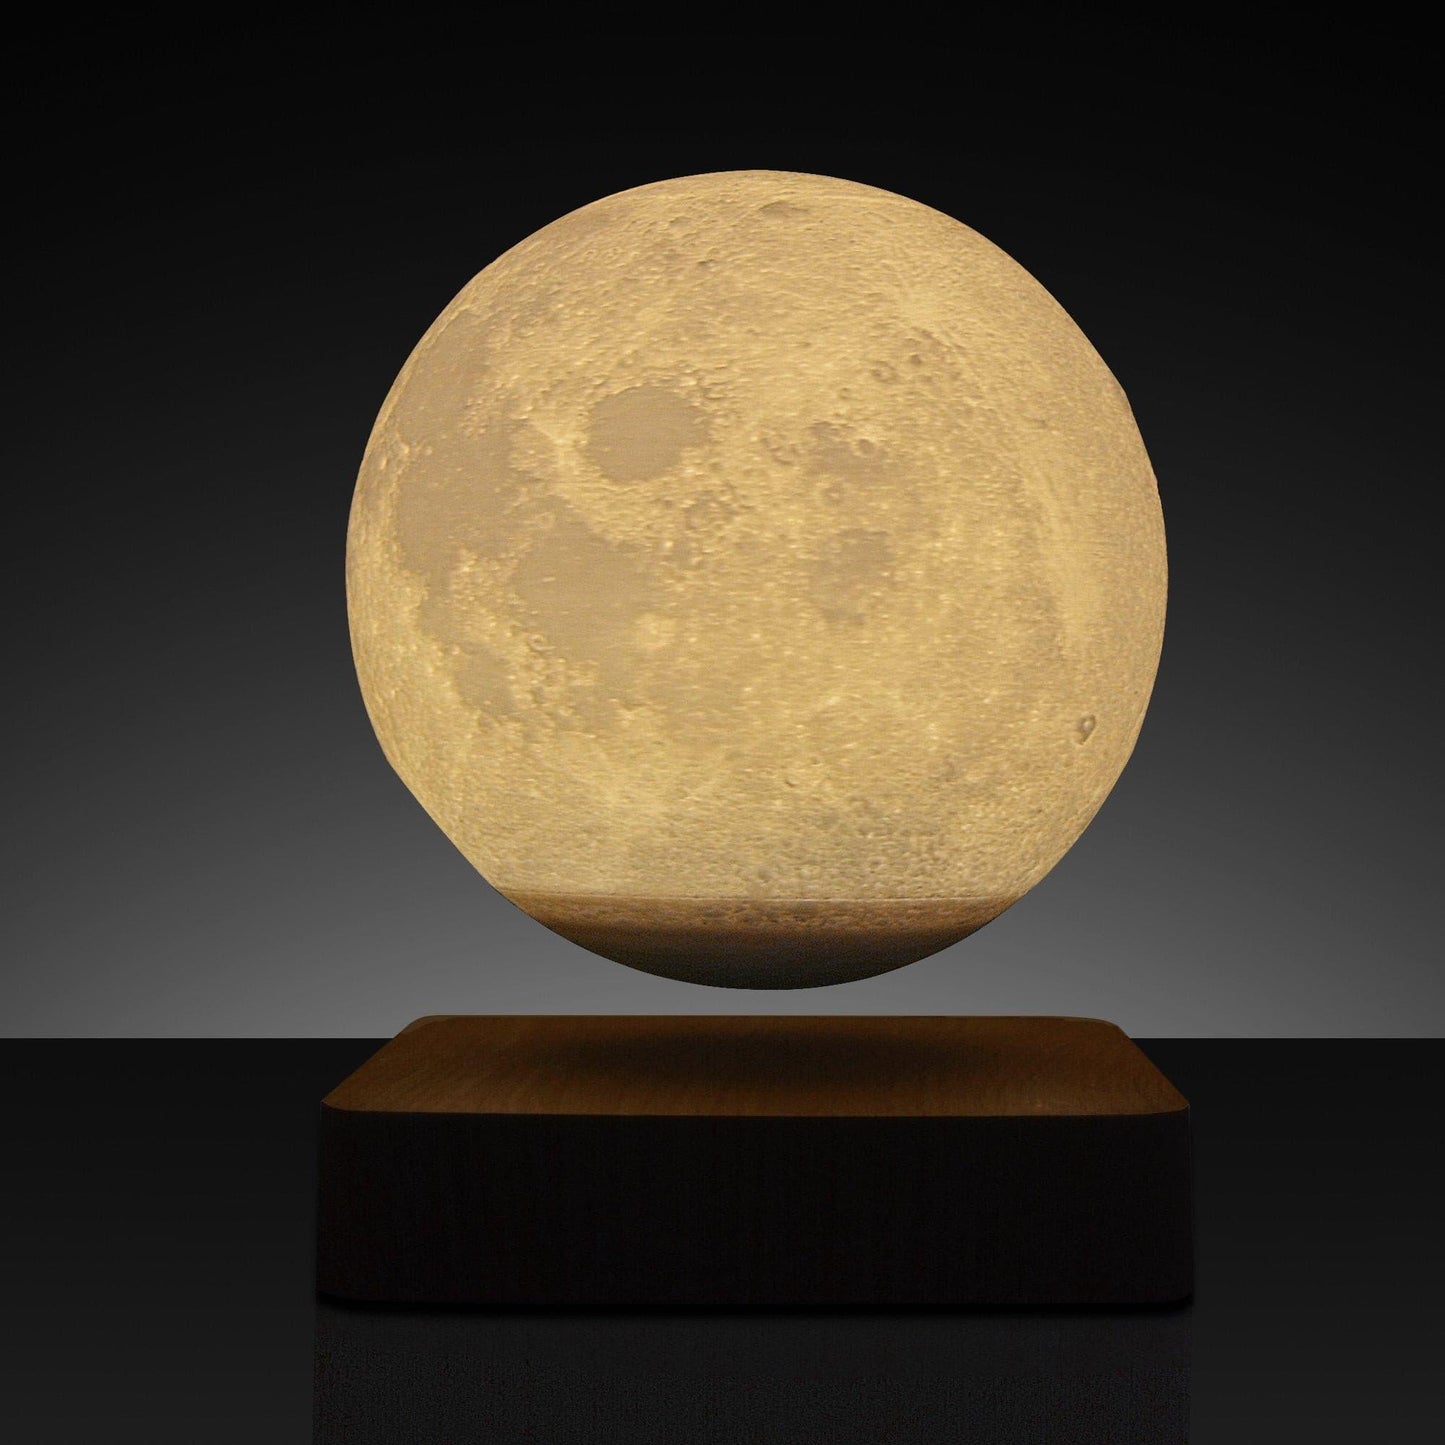 Levitation Moon Lamp, 3D Print Floating Moon - #tiktokmademebuyit